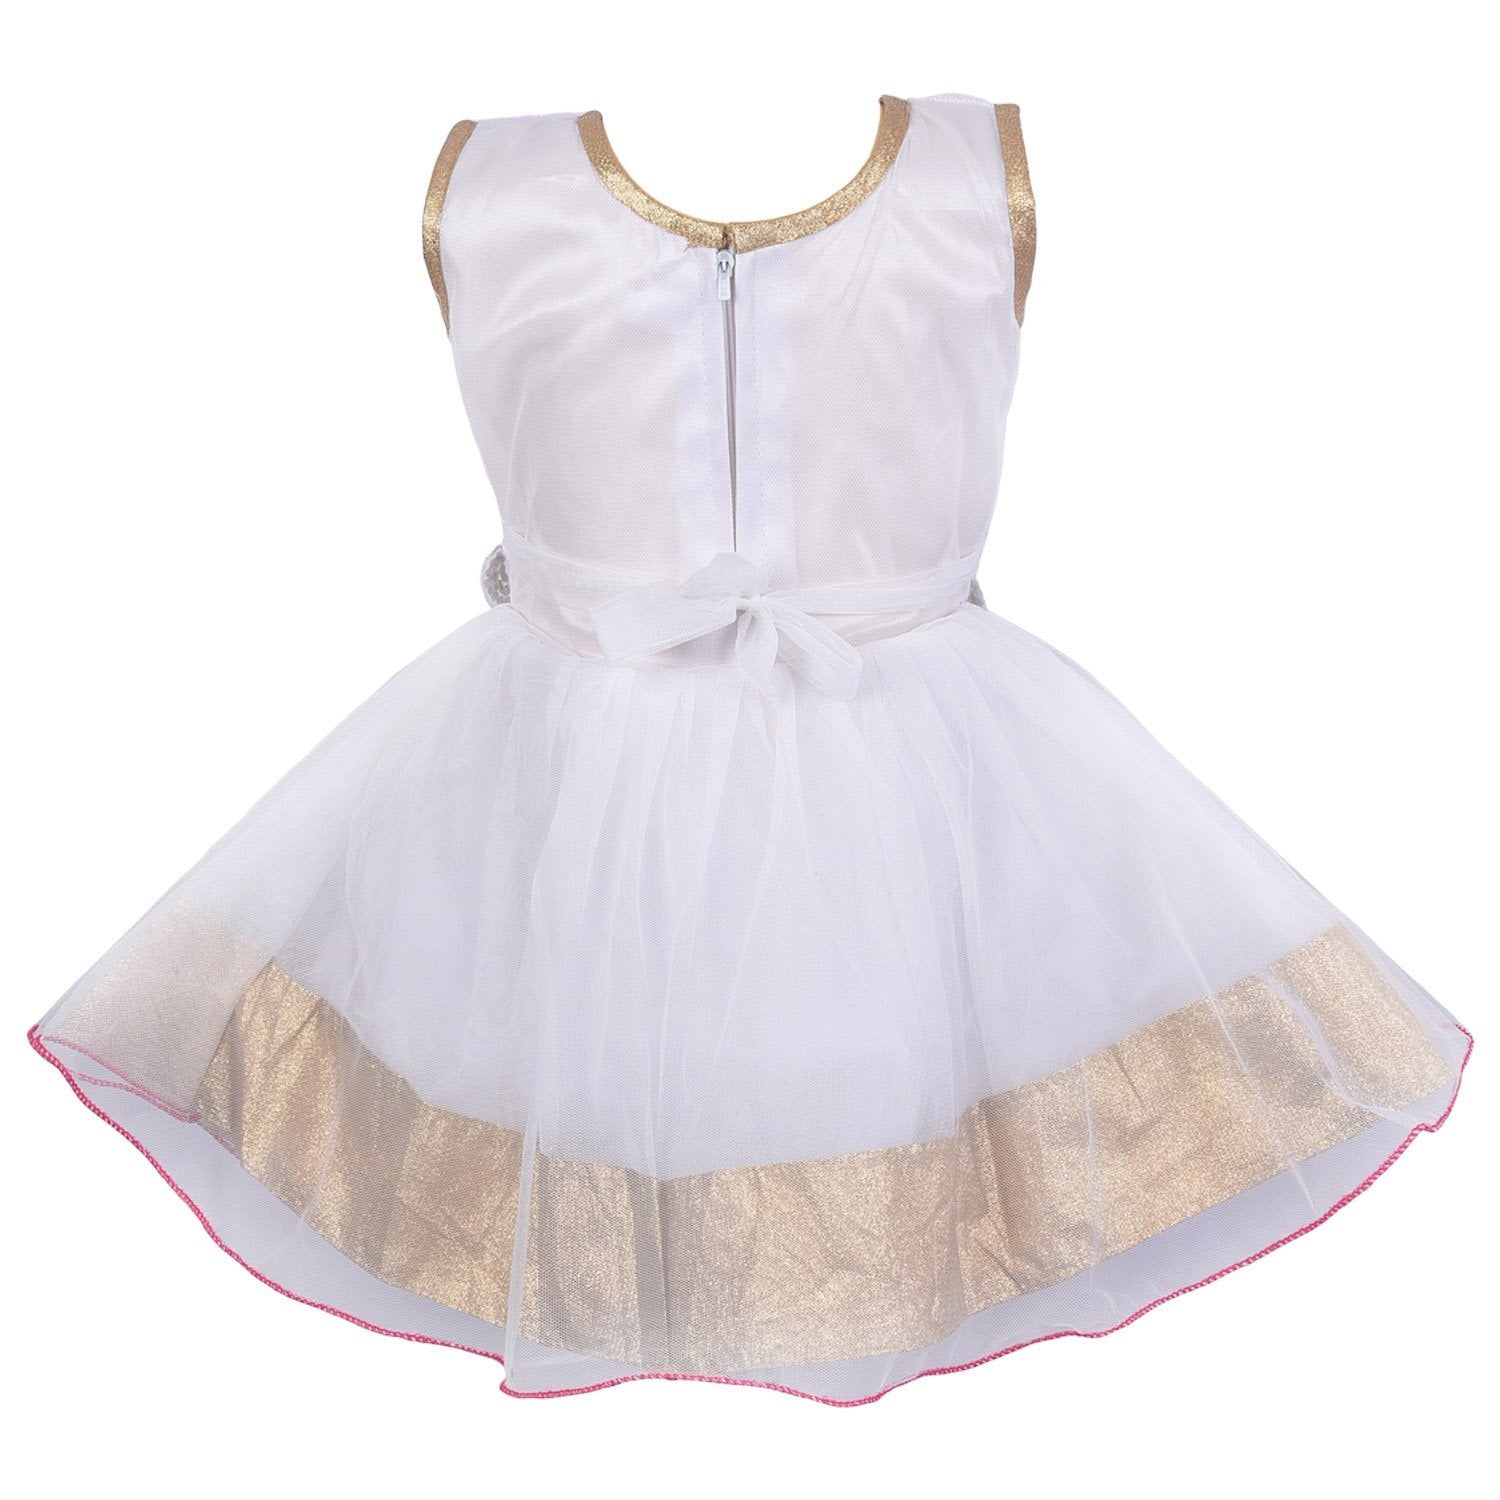 Baby Girls Frock Dress fr10pinknw - Wish Karo Party Wear - frocks Party Wear - baby dress